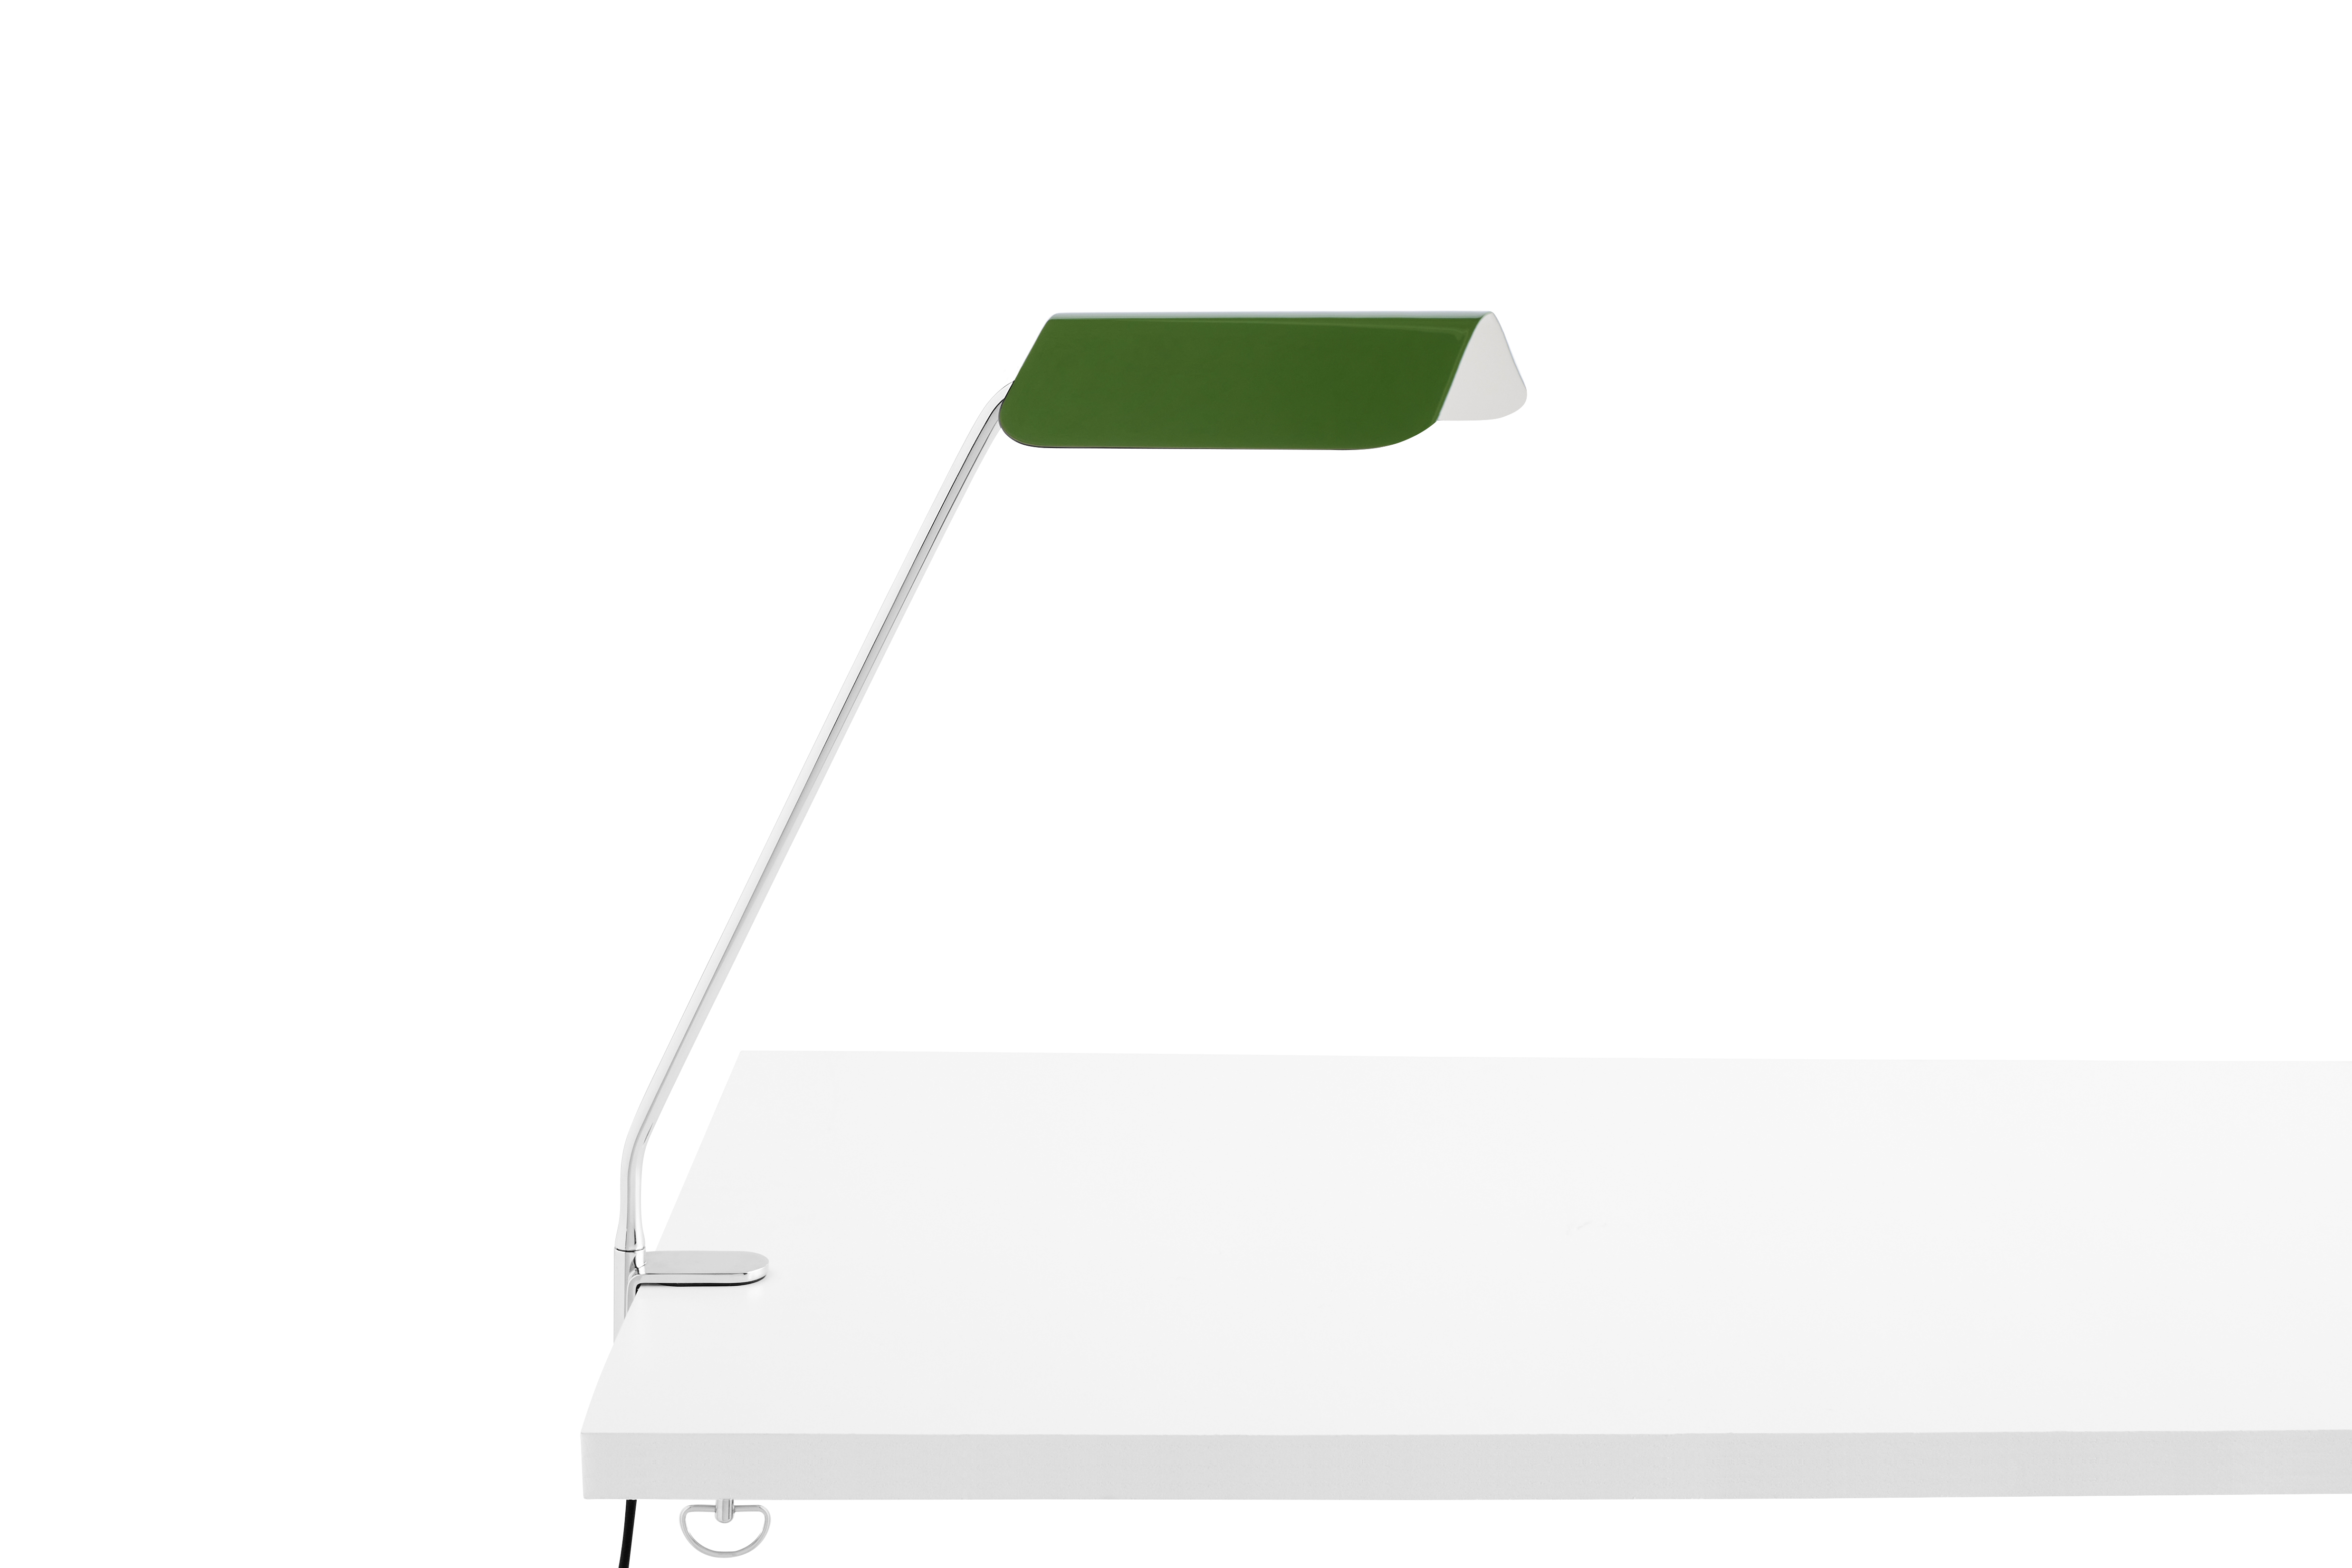 HAY Apex Desk Clip Lamp